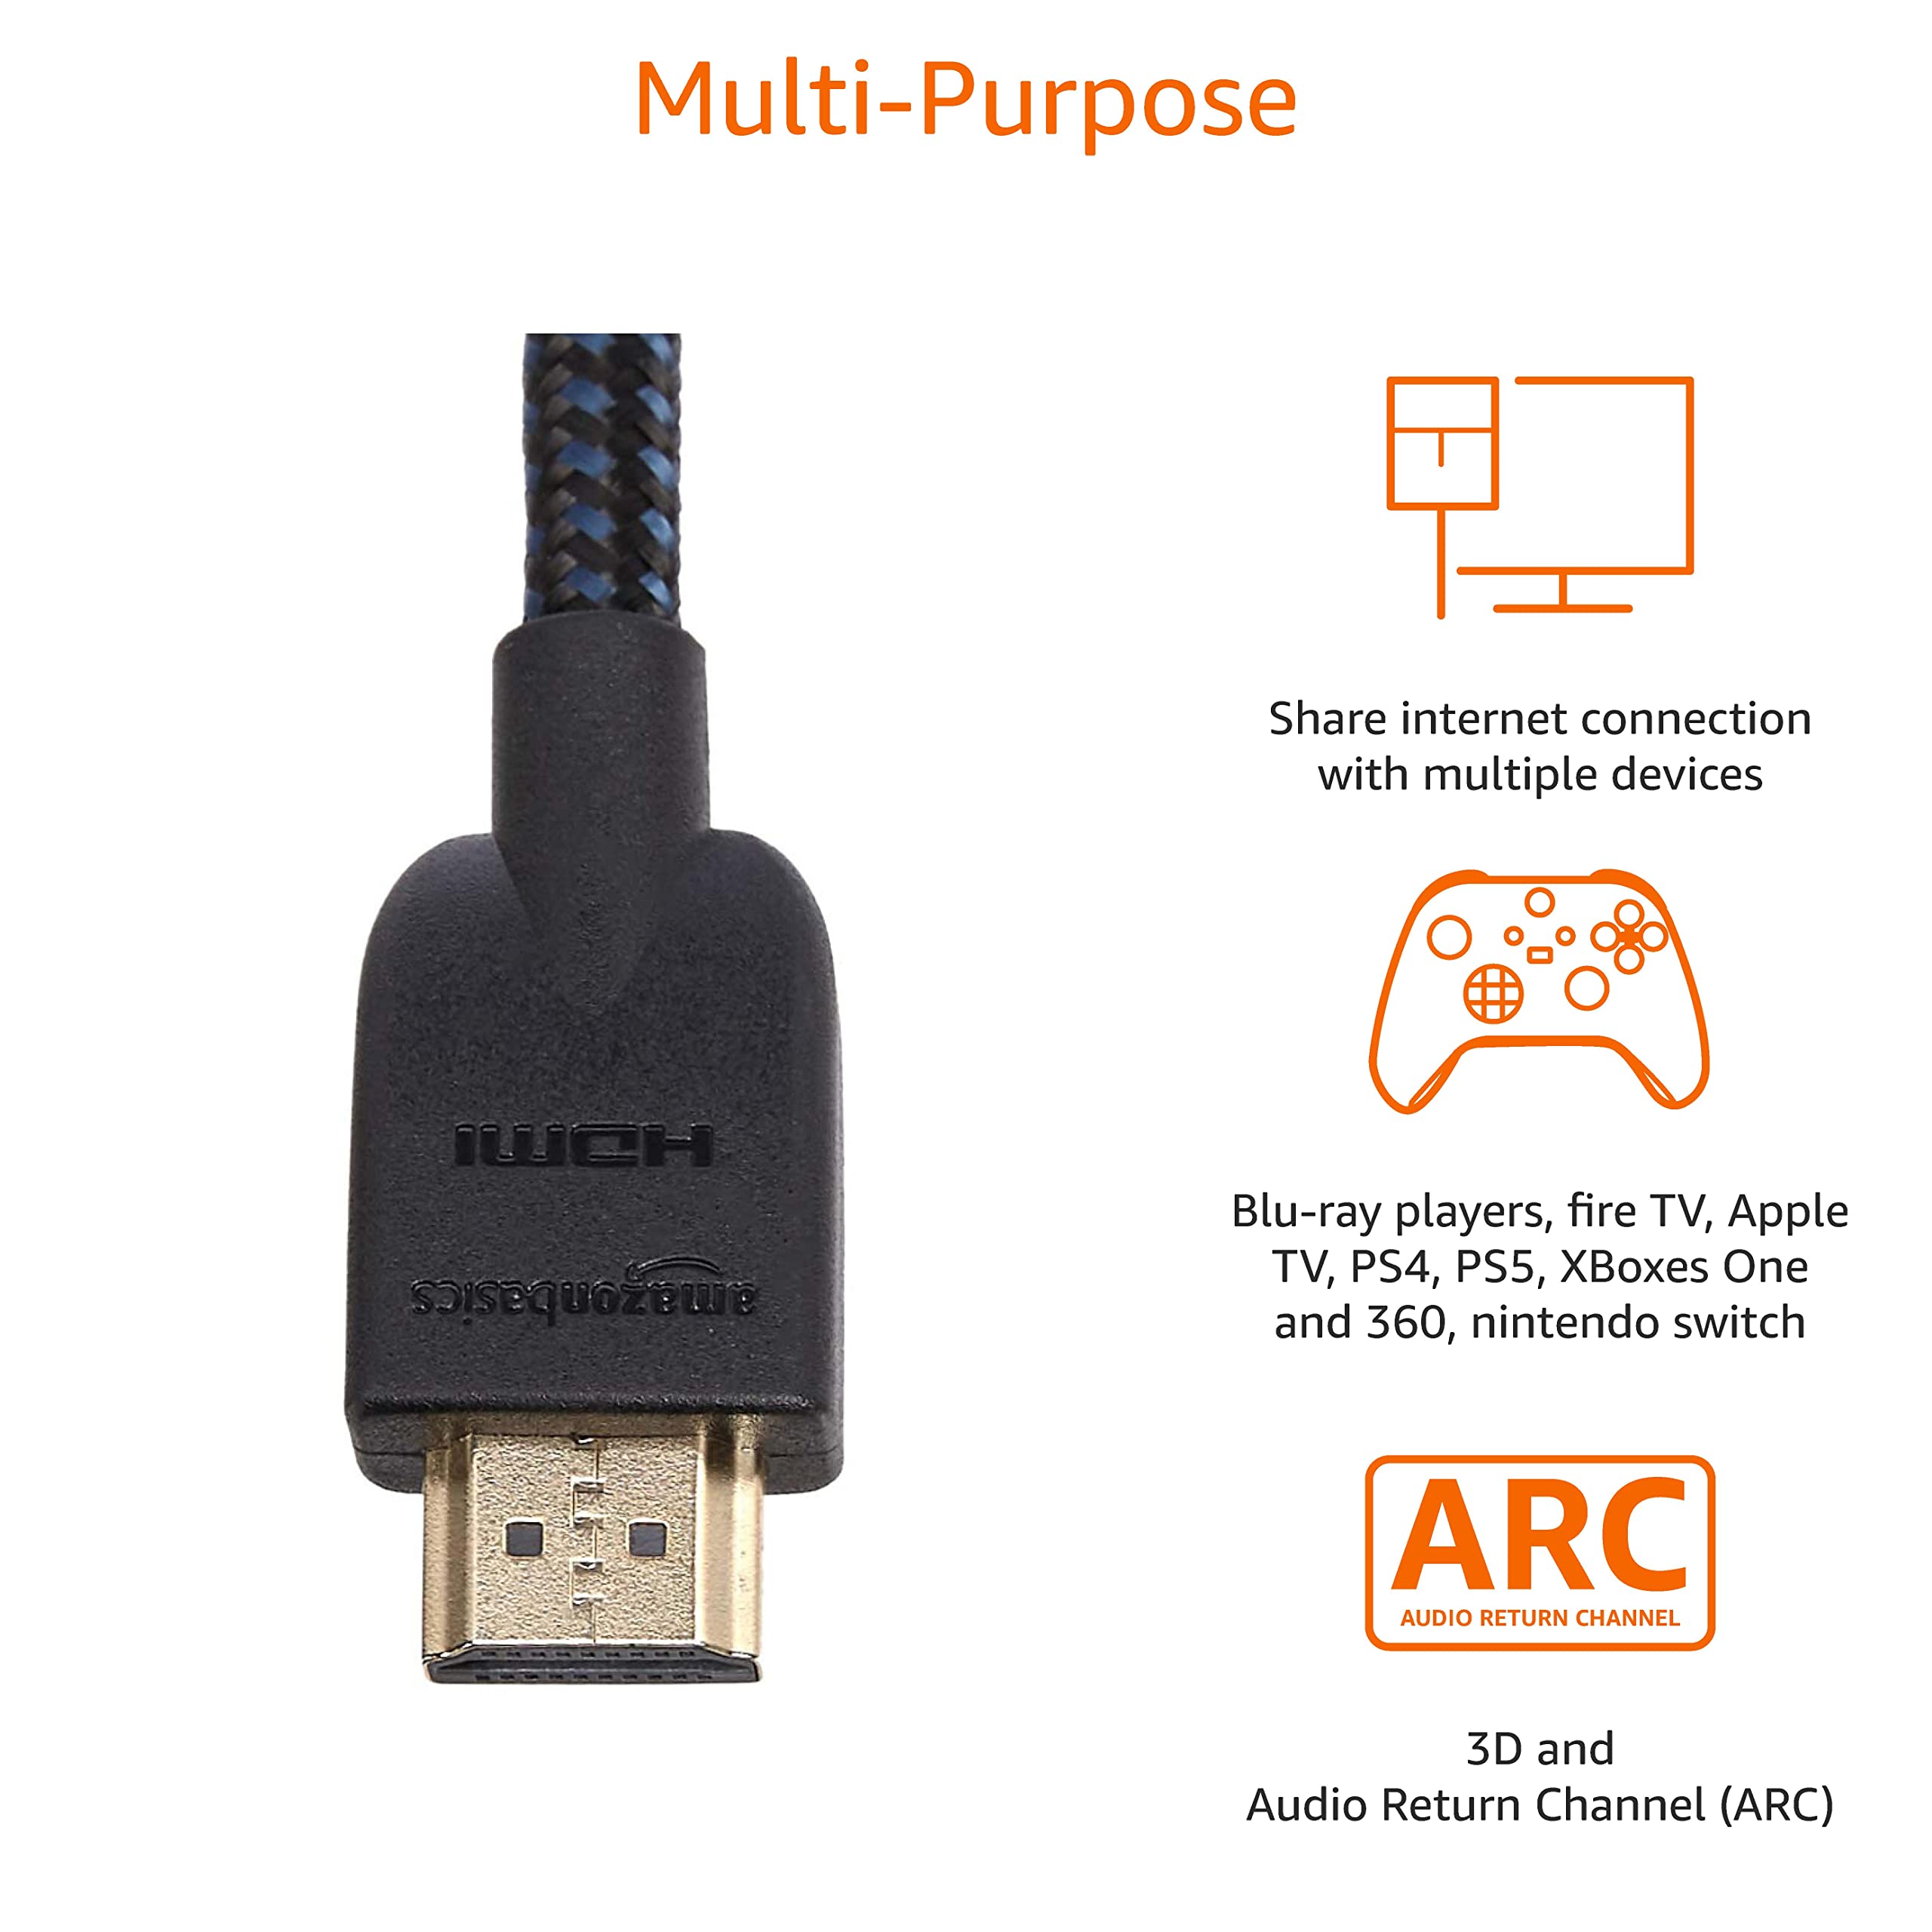 Amazon Basics HDMI Cable, 18Gbps High-Speed, 4K@60Hz, 2160p, Nylon-Braided Cord, Ethernet Ready, 3 Foot, Nylon